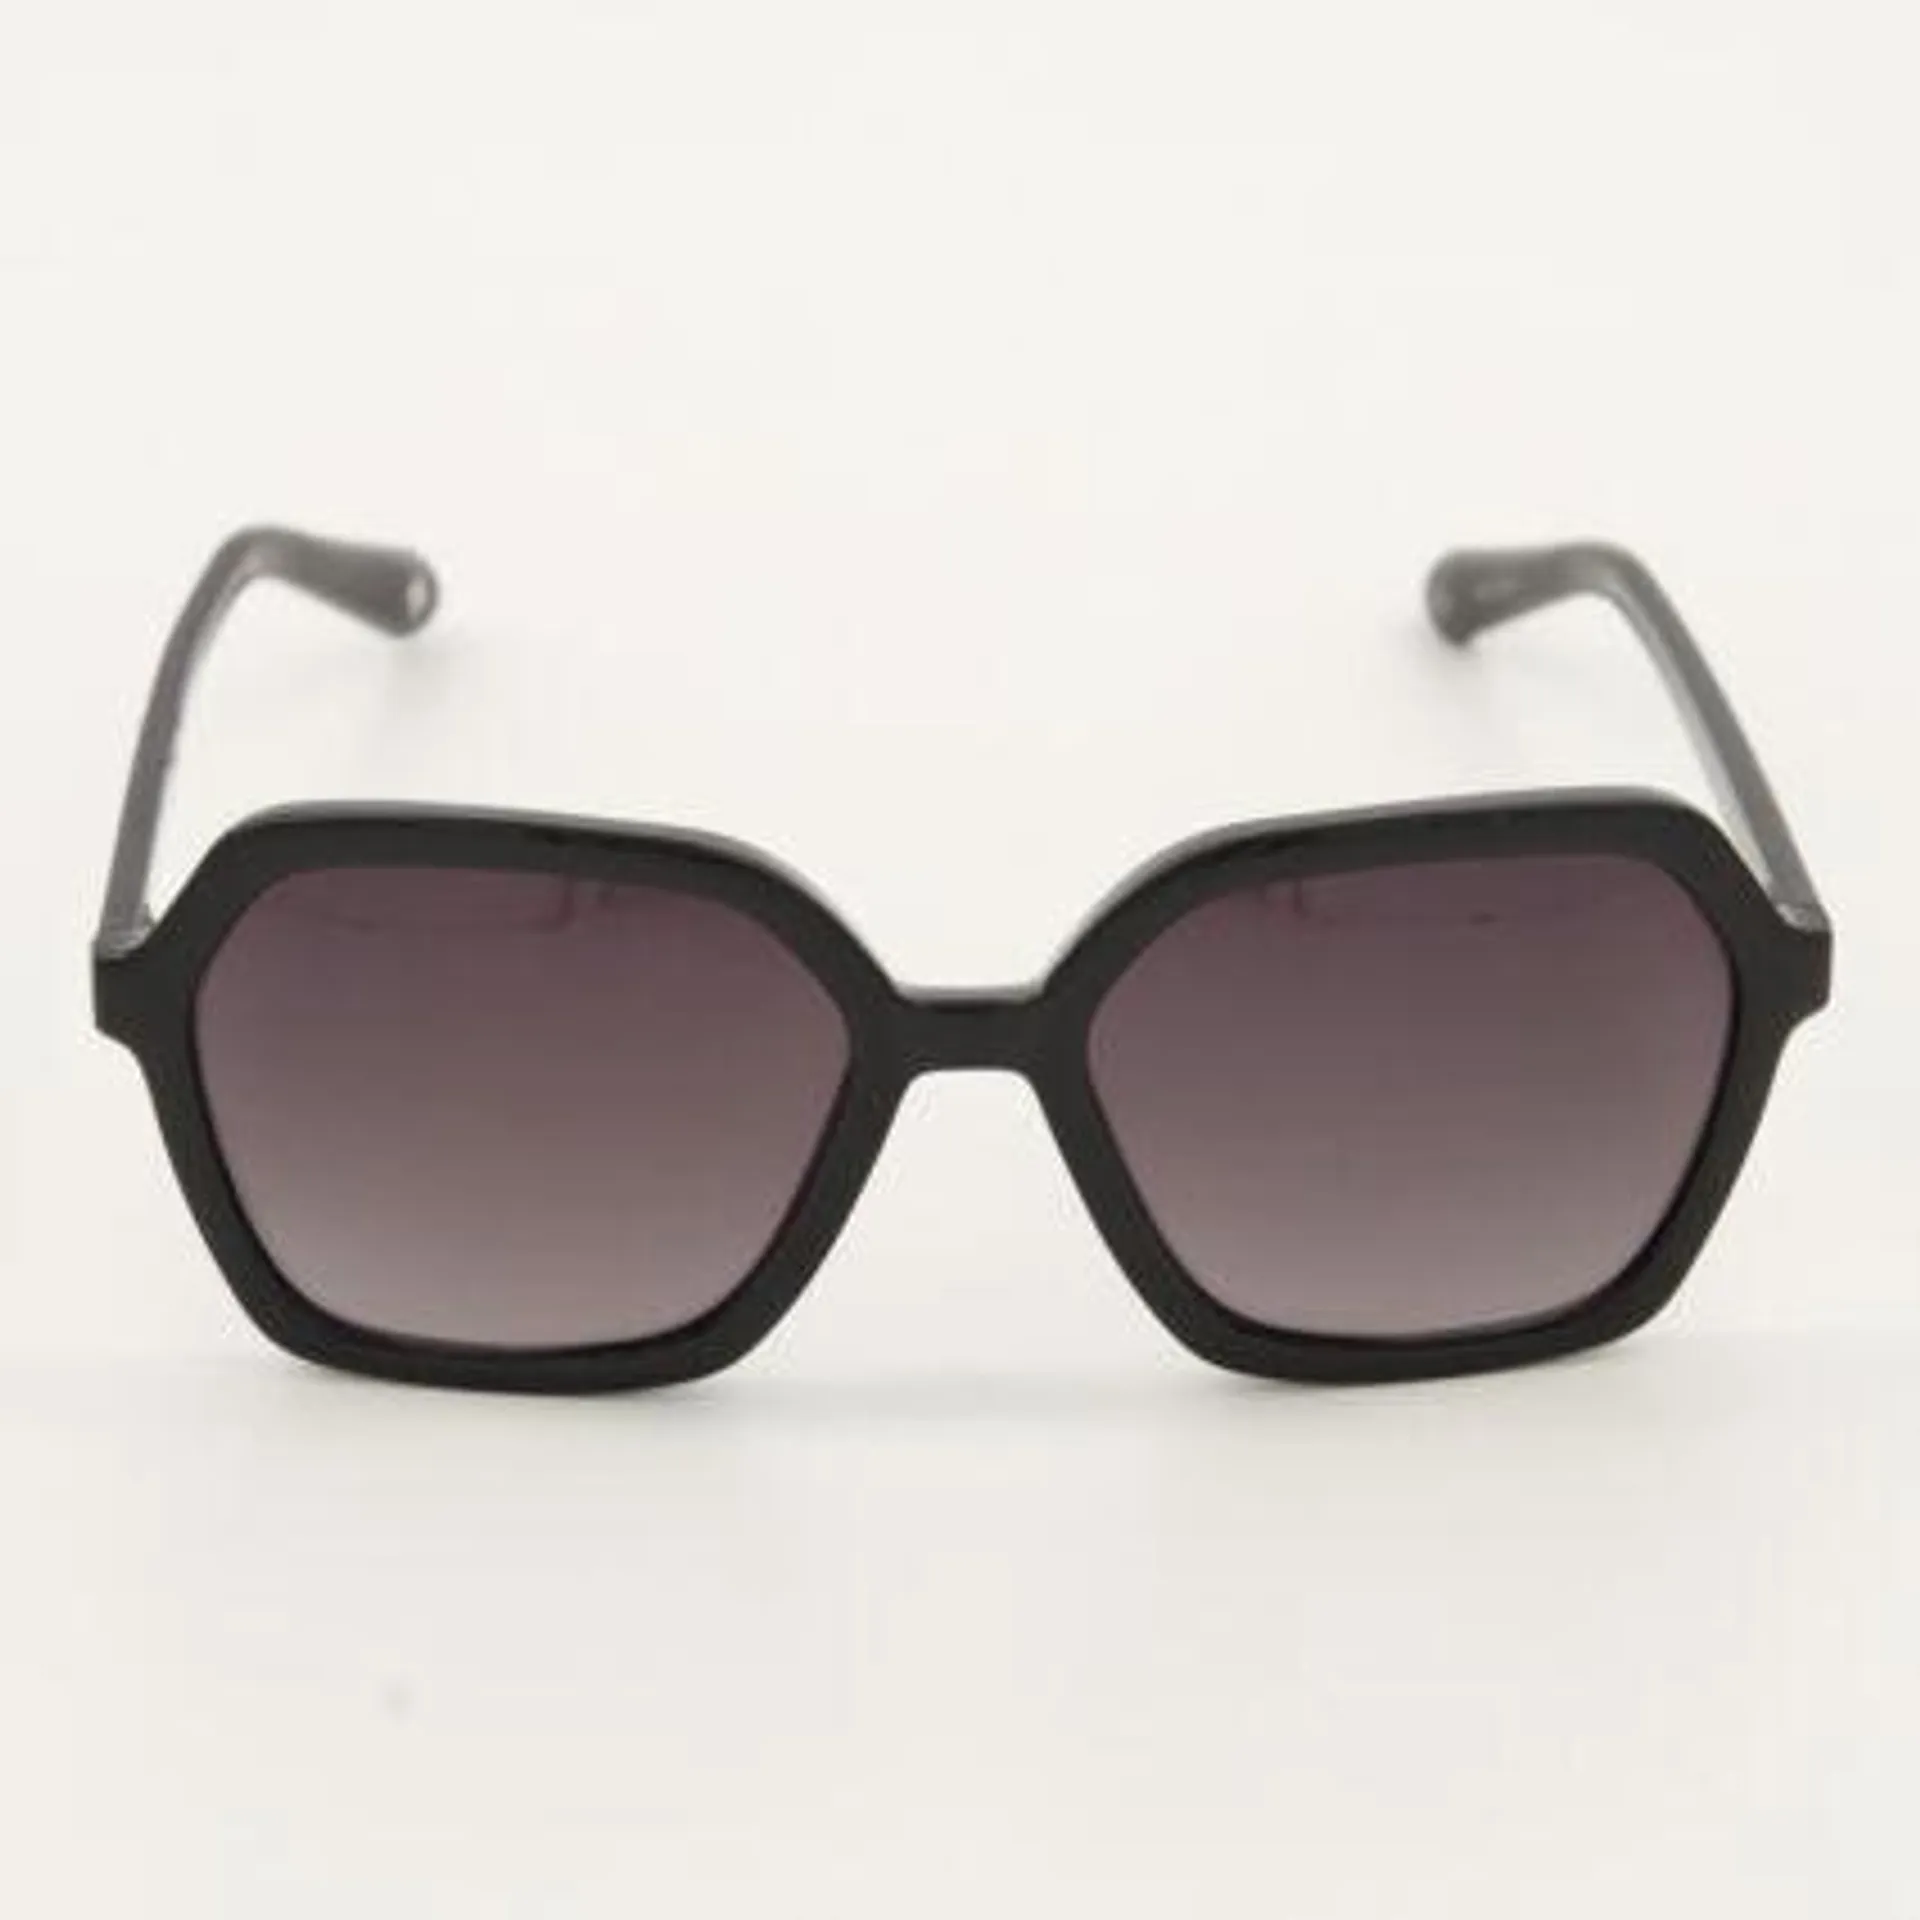 Black FW204 Cat Eye Sunglasses